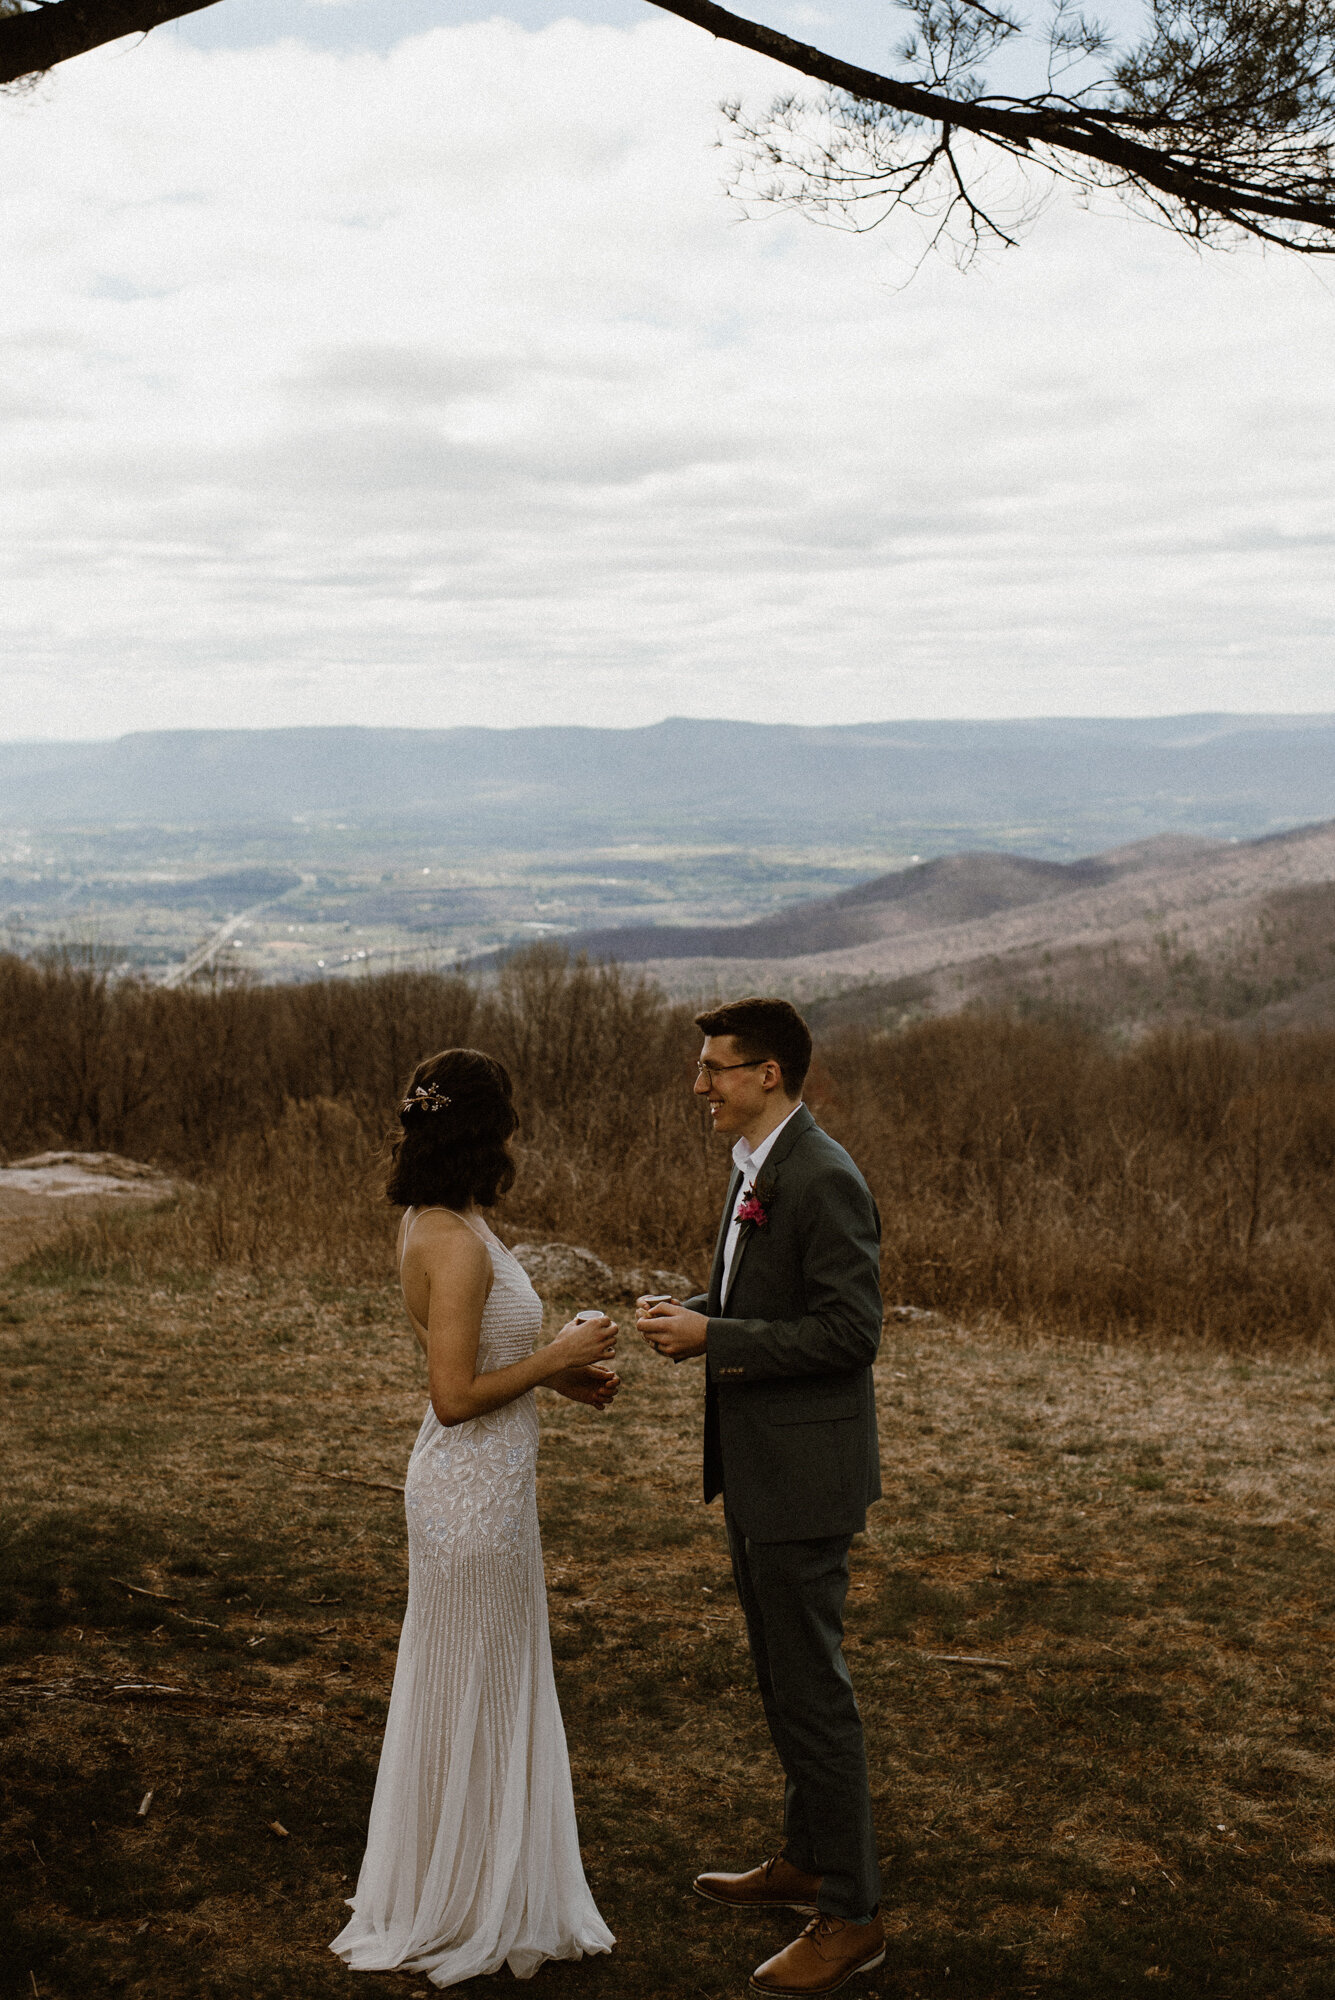 Elopement during Covid-19 - Eloping during Coronavirus - Shenandoah National Park Elopement - Blue Ridge Mountain Virginia Wedding - How to Elope in Shenandoah National Park - Mountain Wedding Ideas_22.jpg